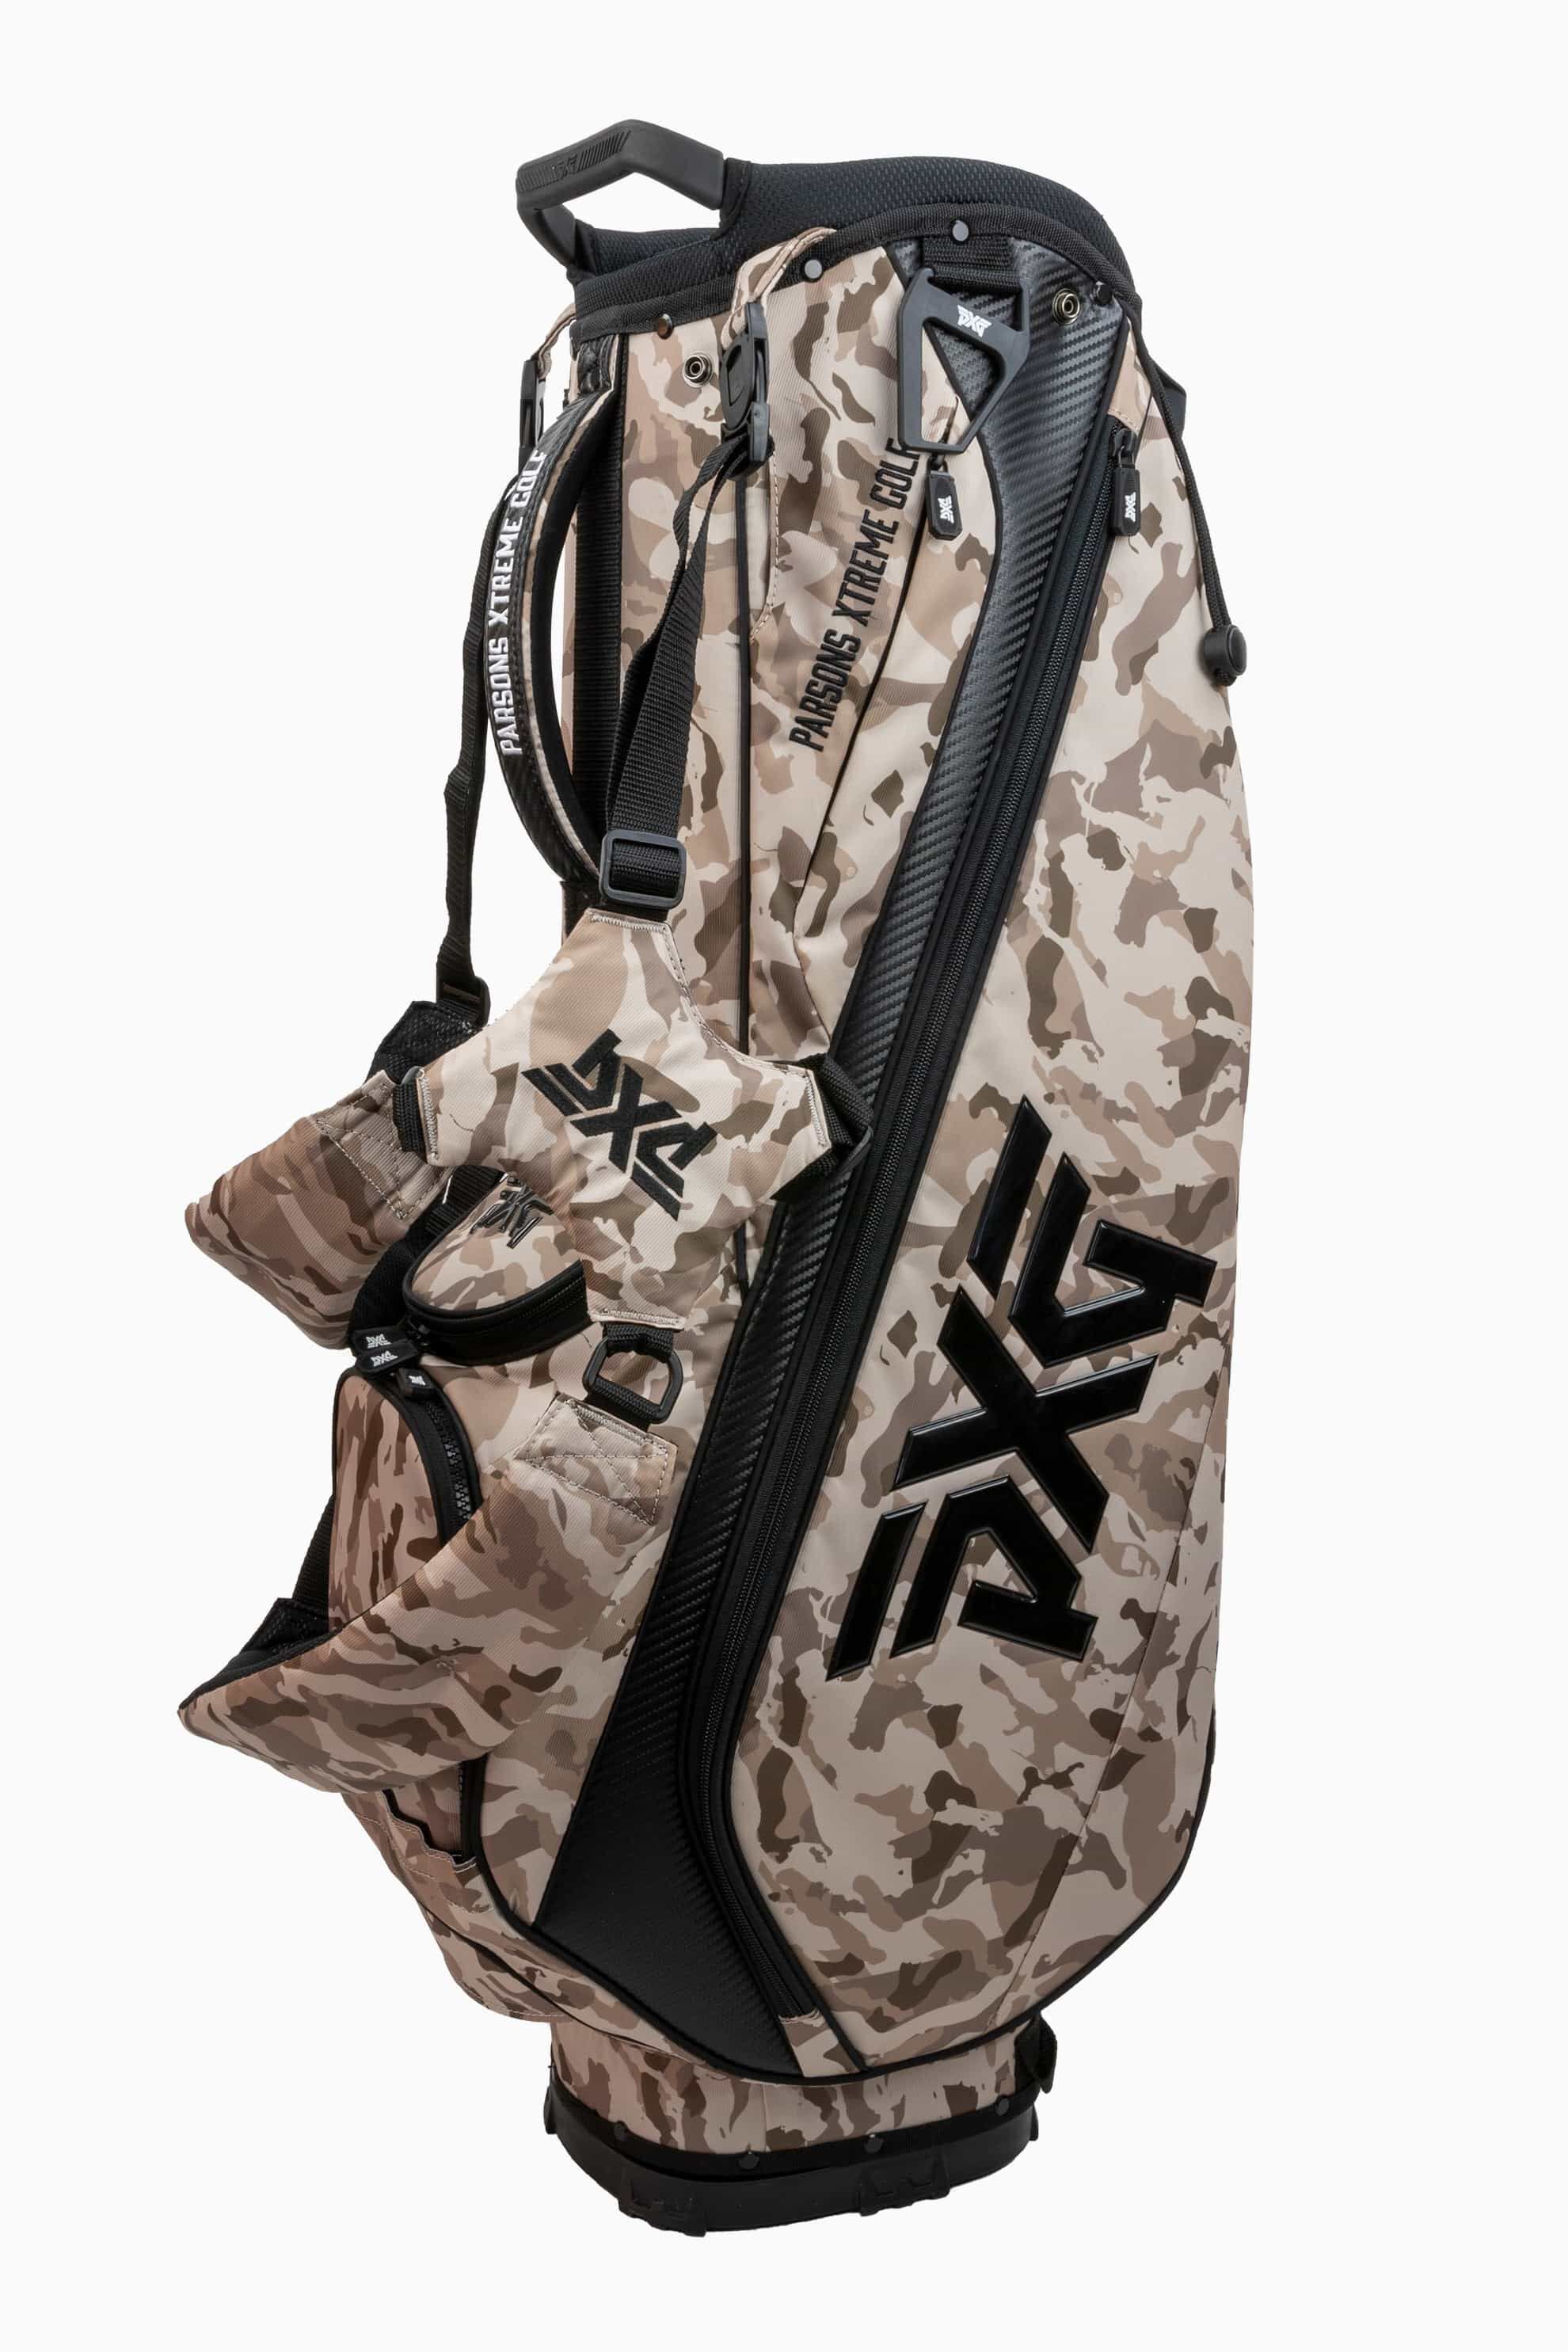 Buy Desert Tan Fairway Camo Carry Stand Bag | PXG